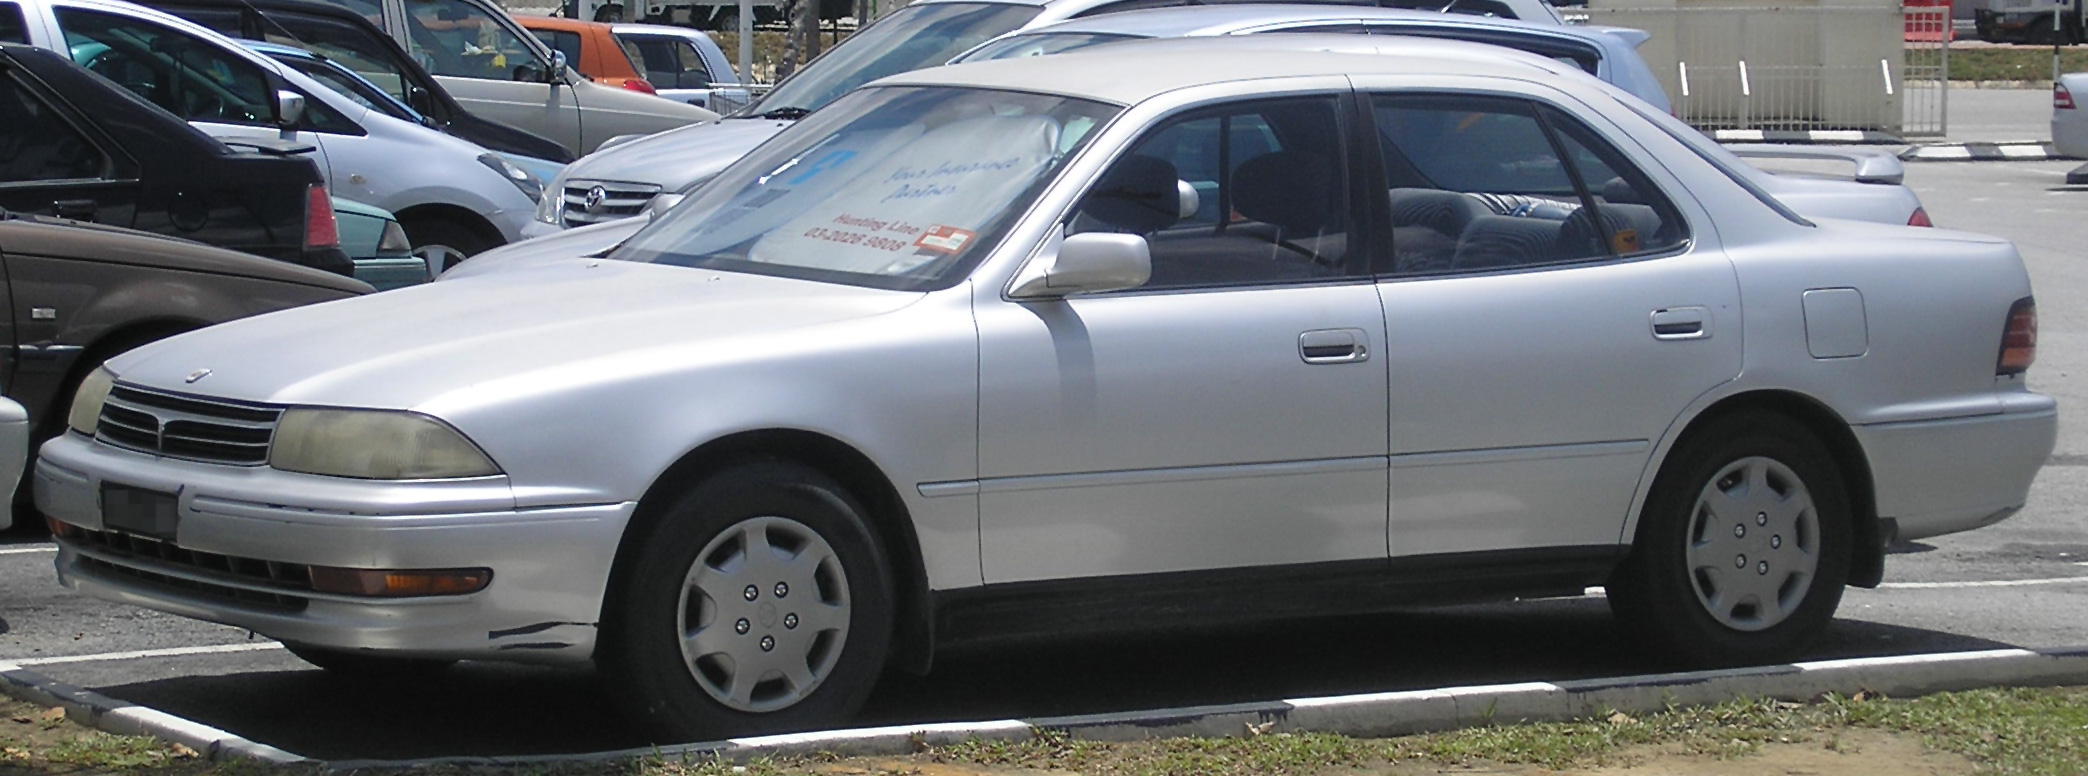 Toyota Vista IV (V40) 1994 - 1998 Sedan-Hardtop #1